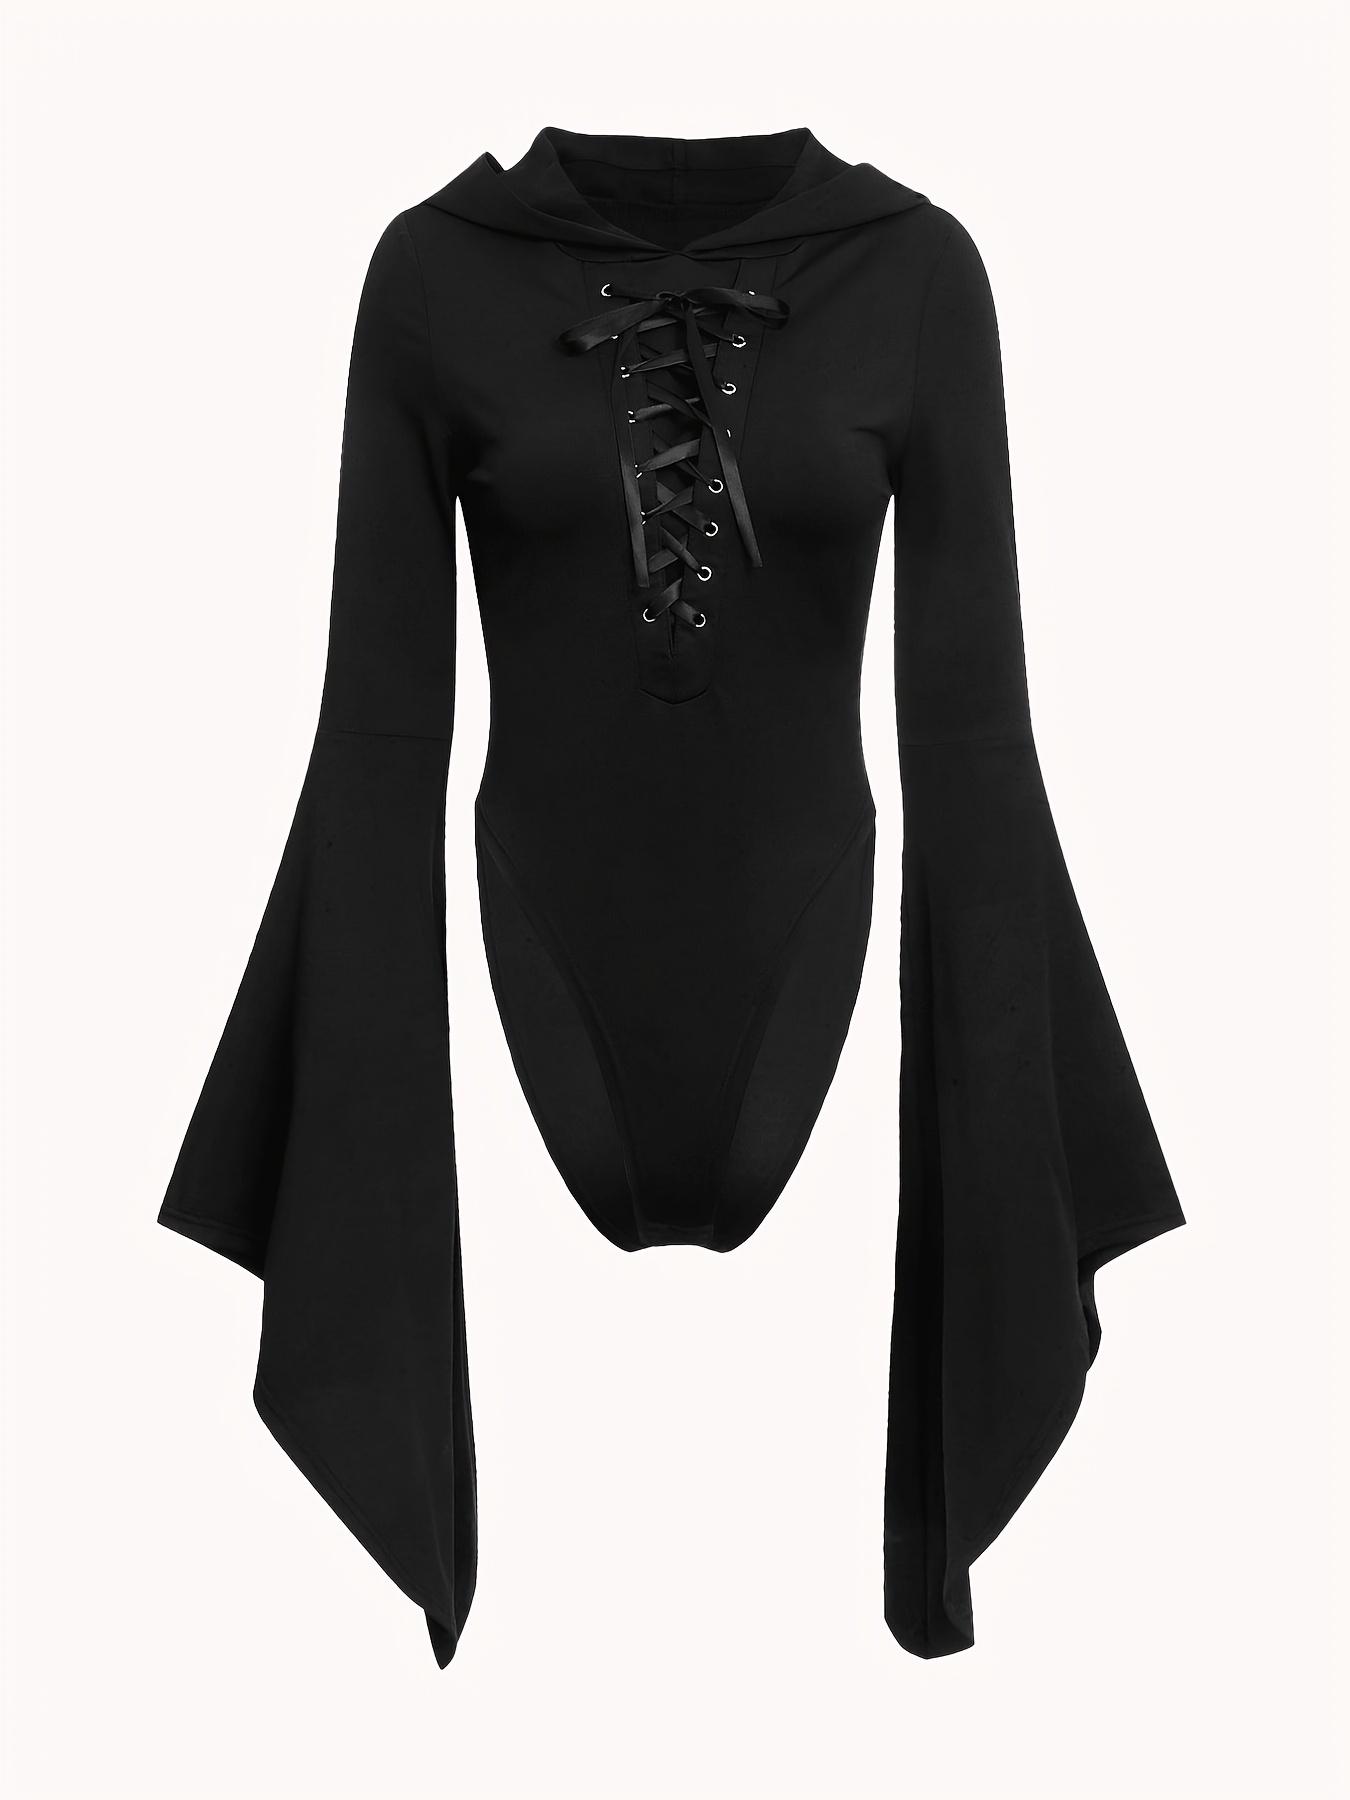 Goth Black Cutout Bodysuit Women Long Sleeve High Neck Leotard